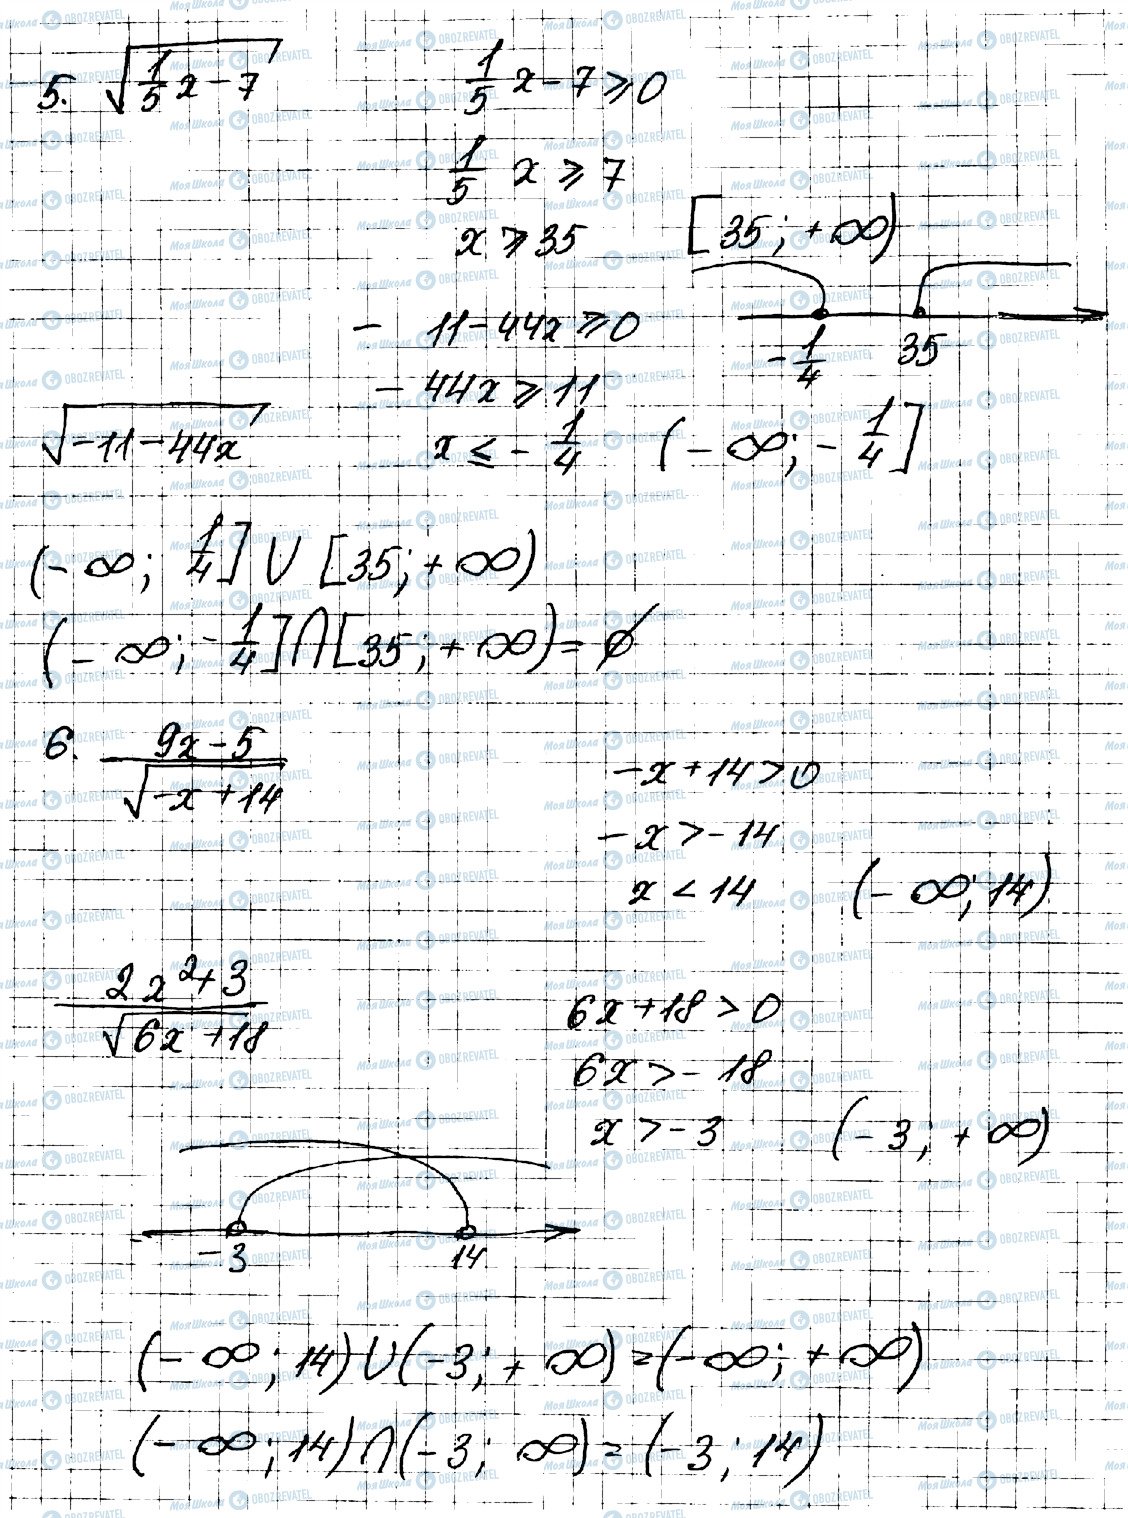 ГДЗ Алгебра 9 клас сторінка 3